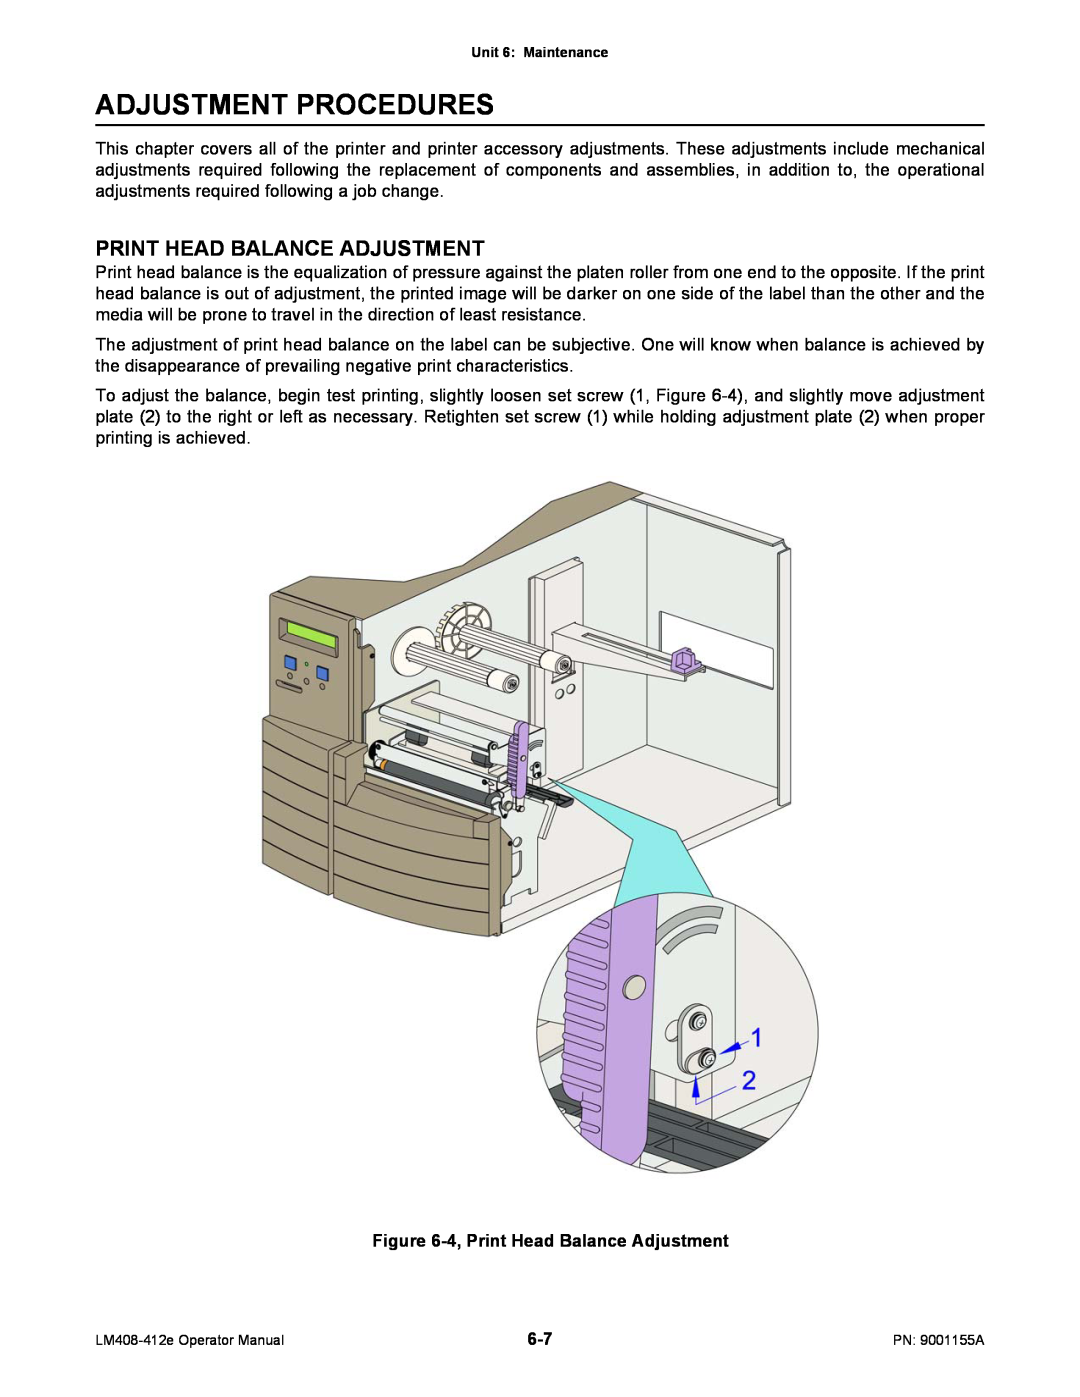 SATO LM408/412E manual Adjustment Procedures, Print Head Balance Adjustment 